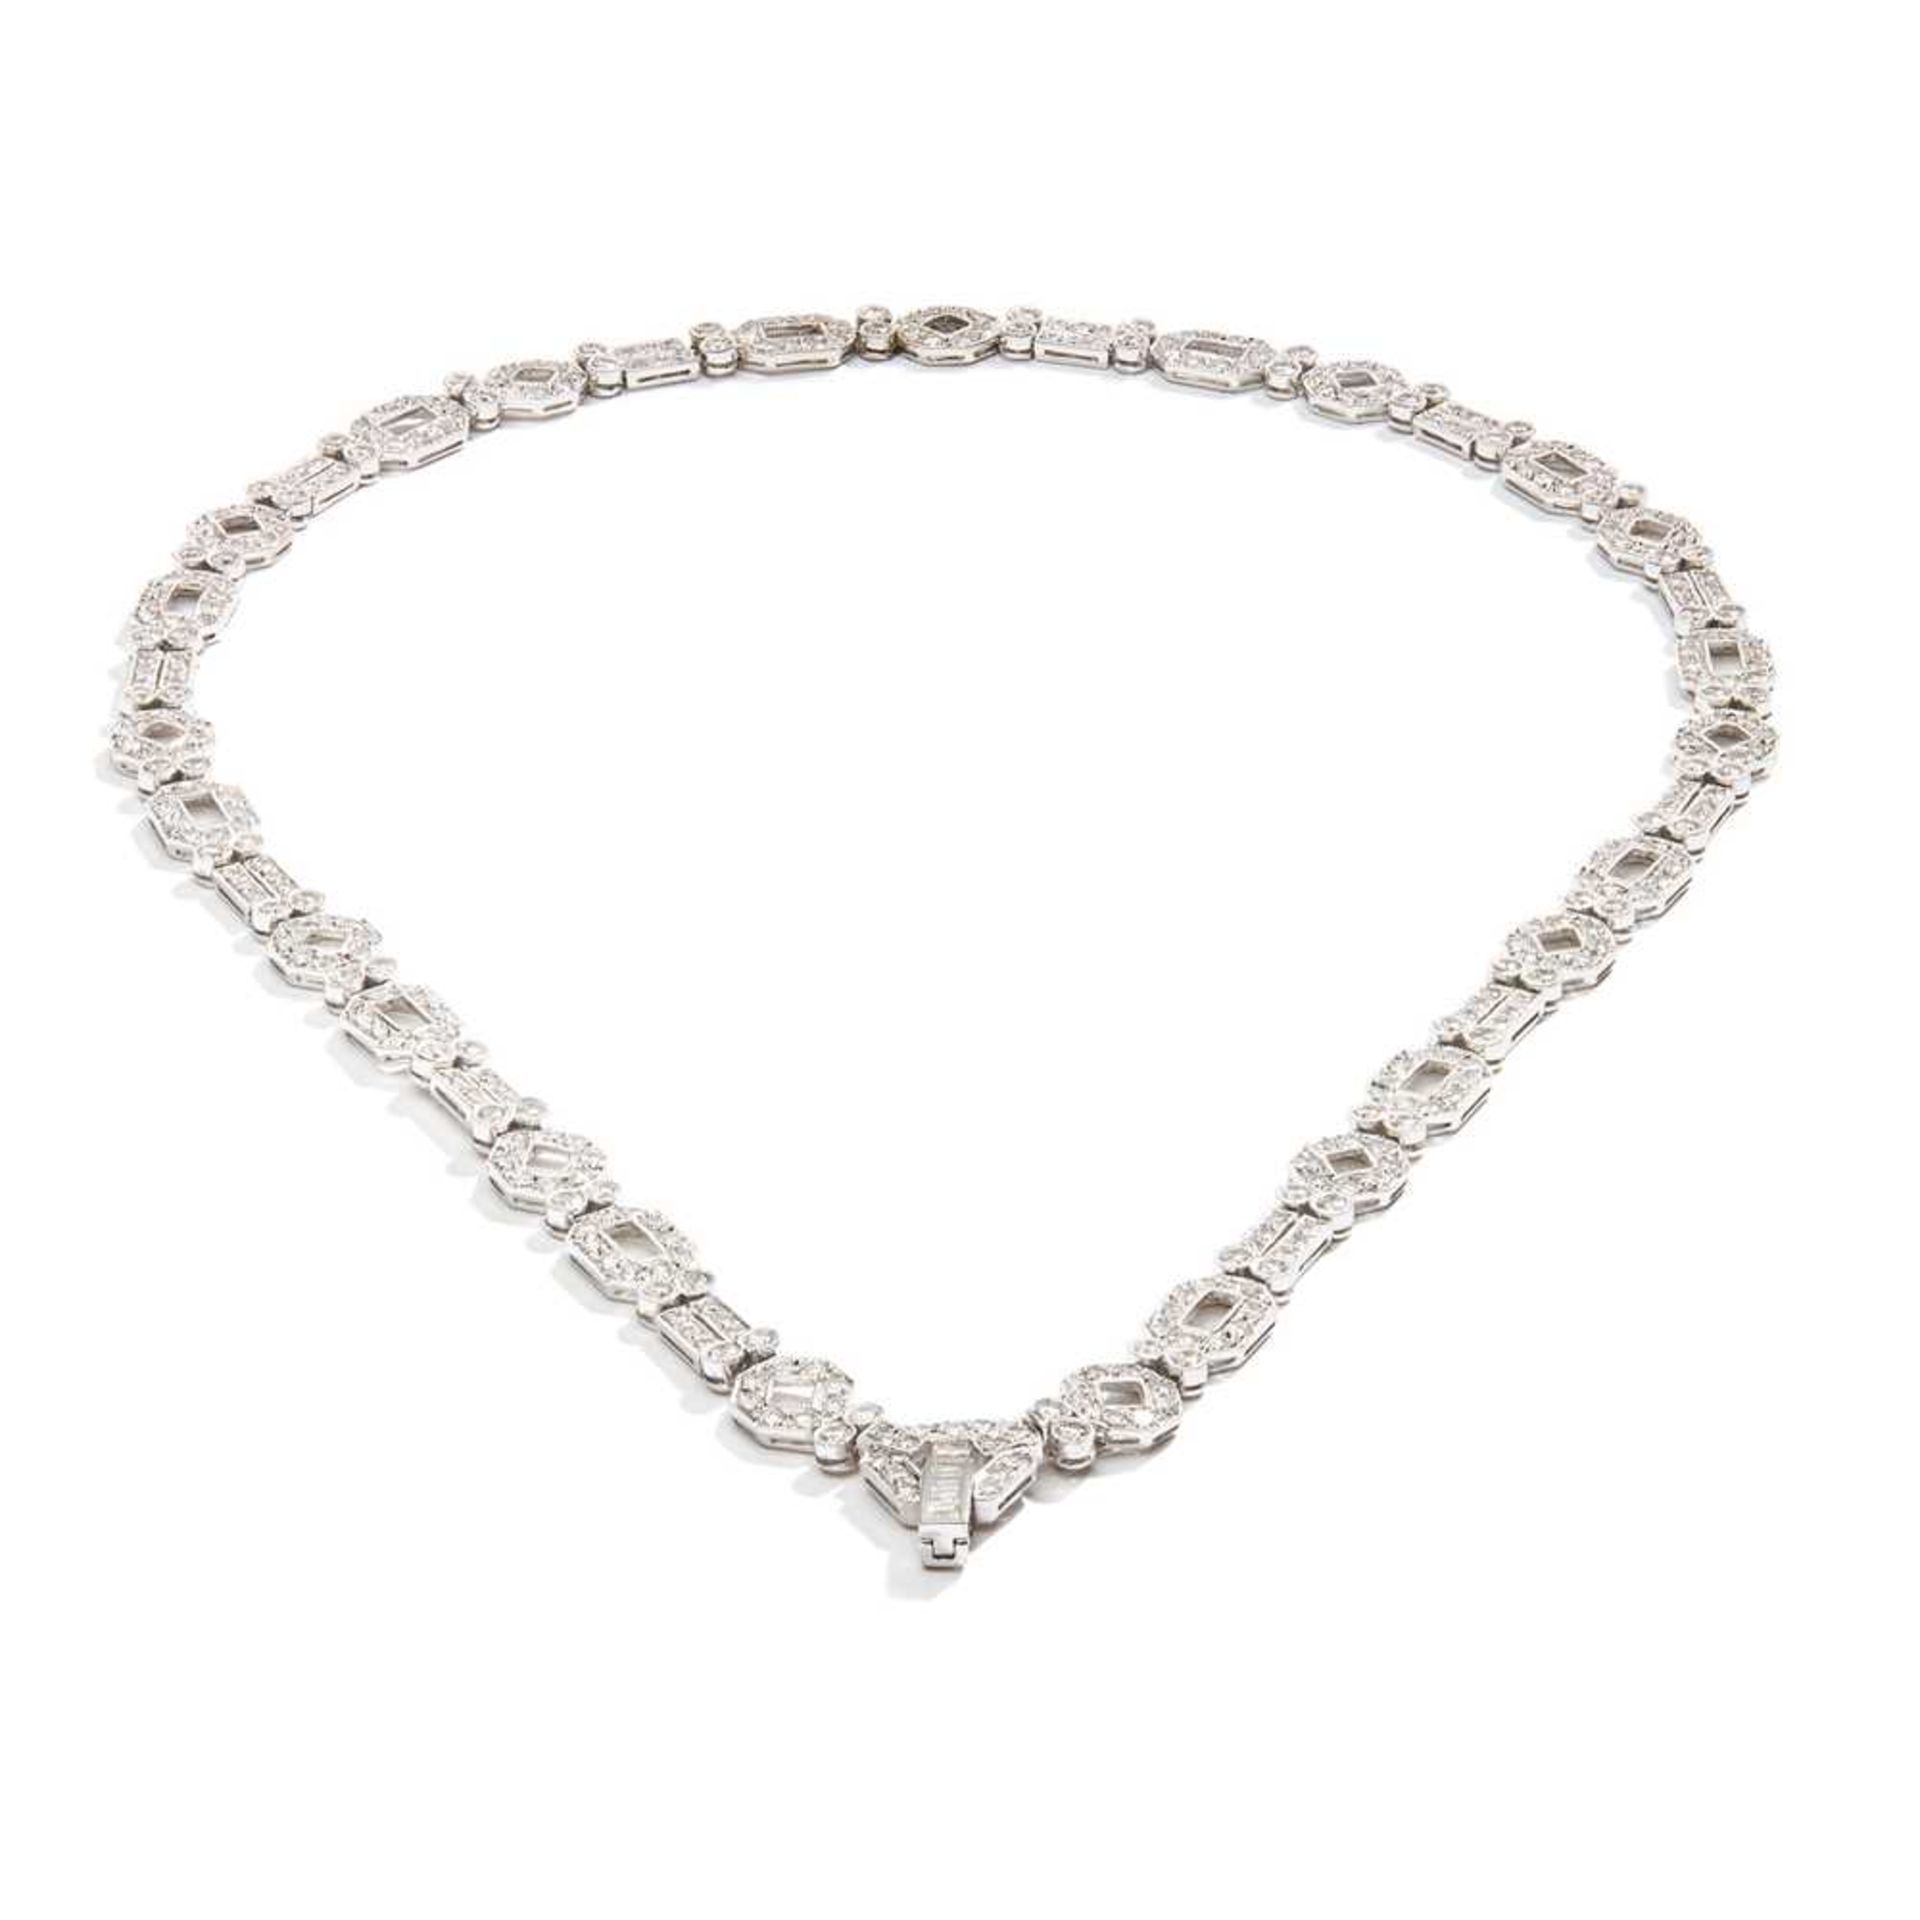 A diamond necklace - Image 2 of 3